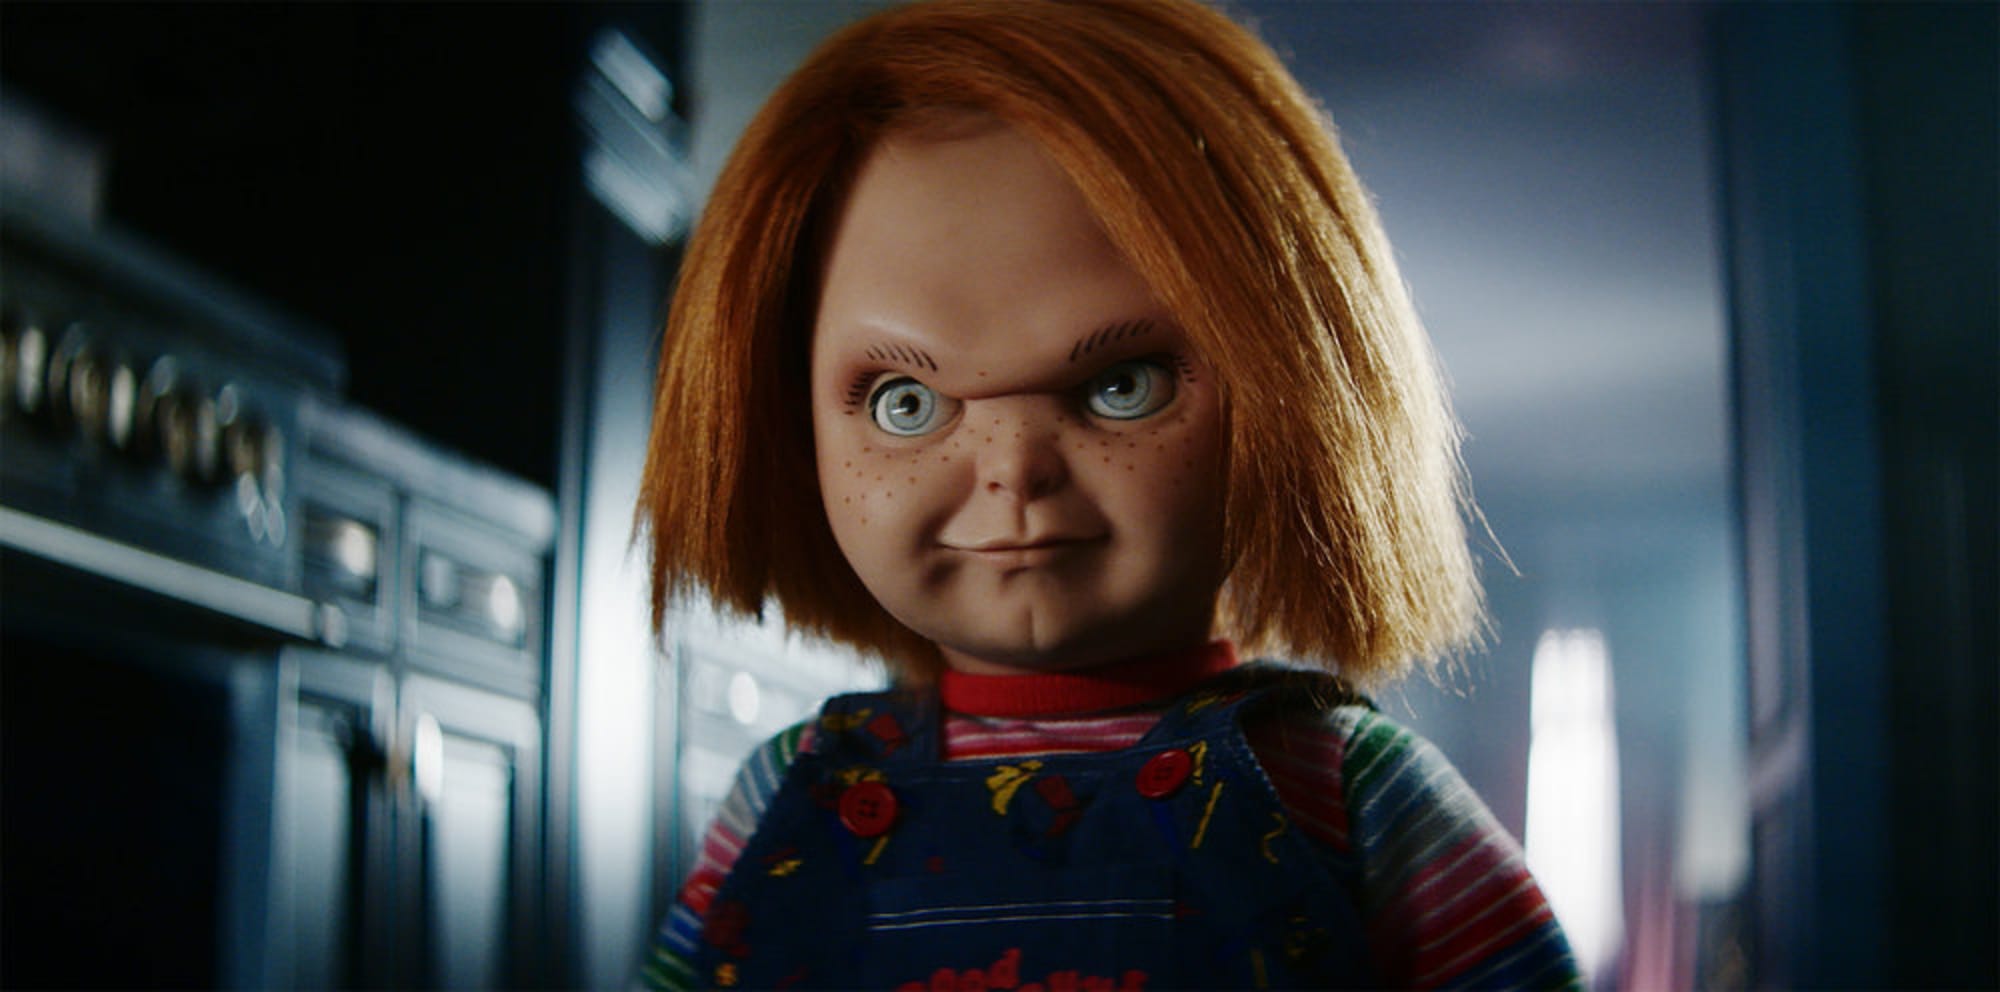 Chucky season 2 news Chucky season 2 release date, cast, and more